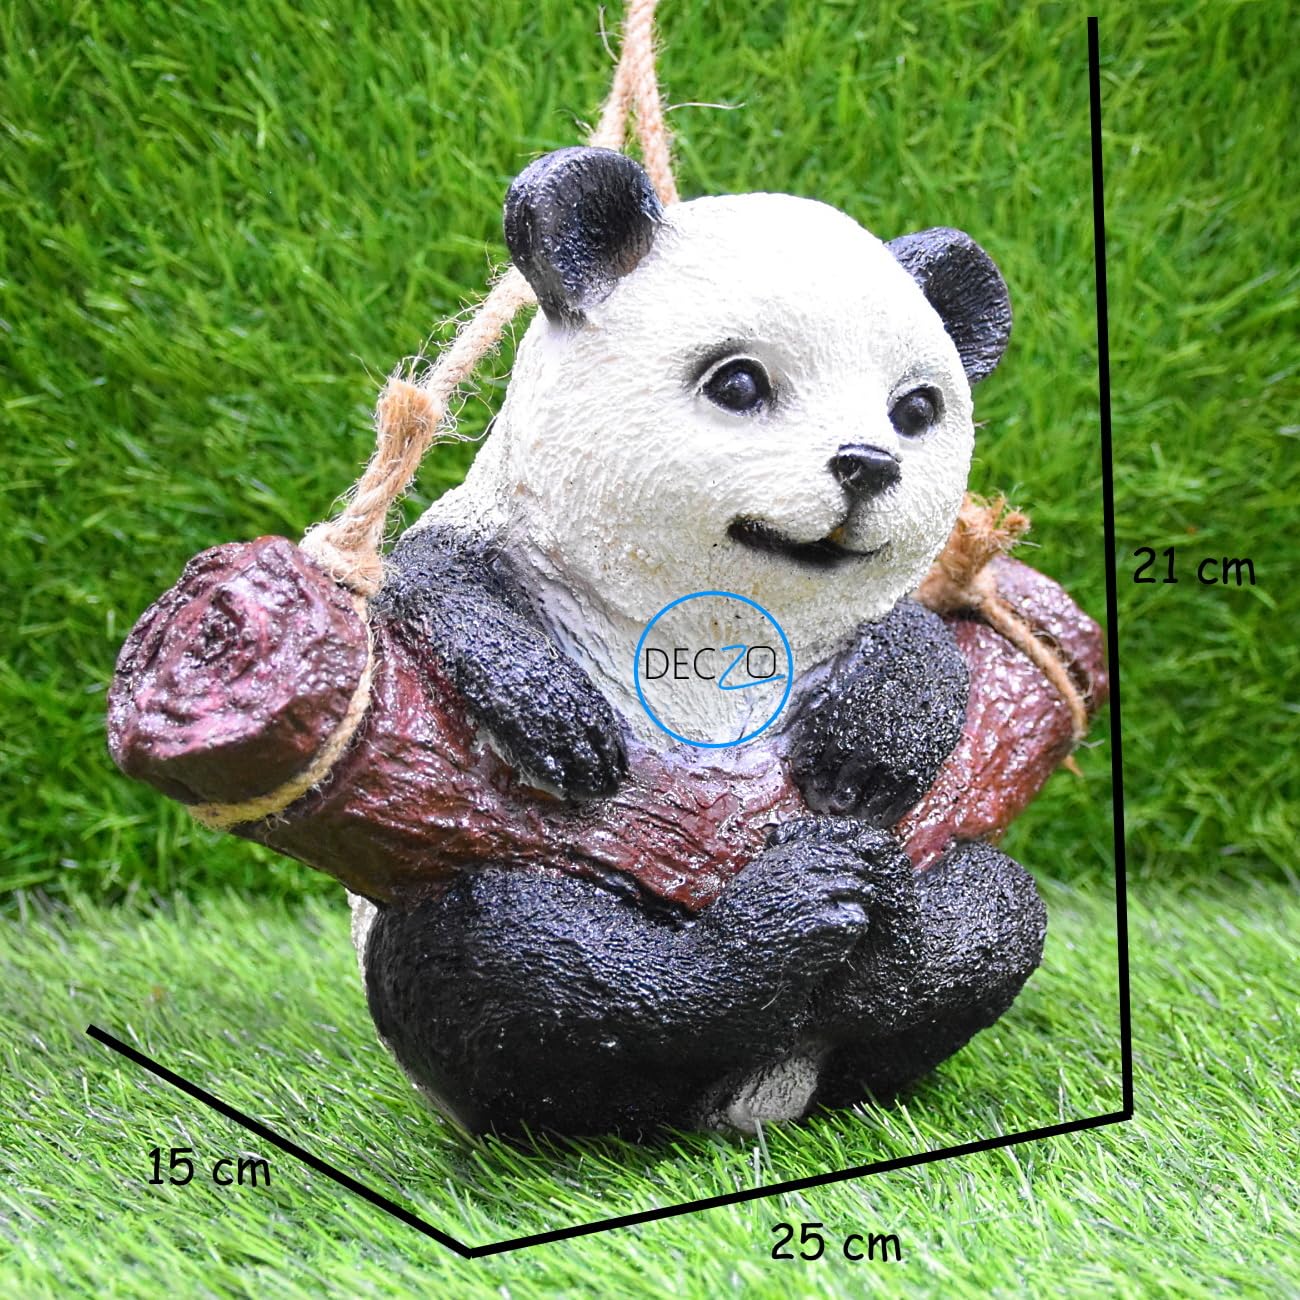 Poly-Resin Hanging Decor for Garden, Home, Gift (Baby Panda)